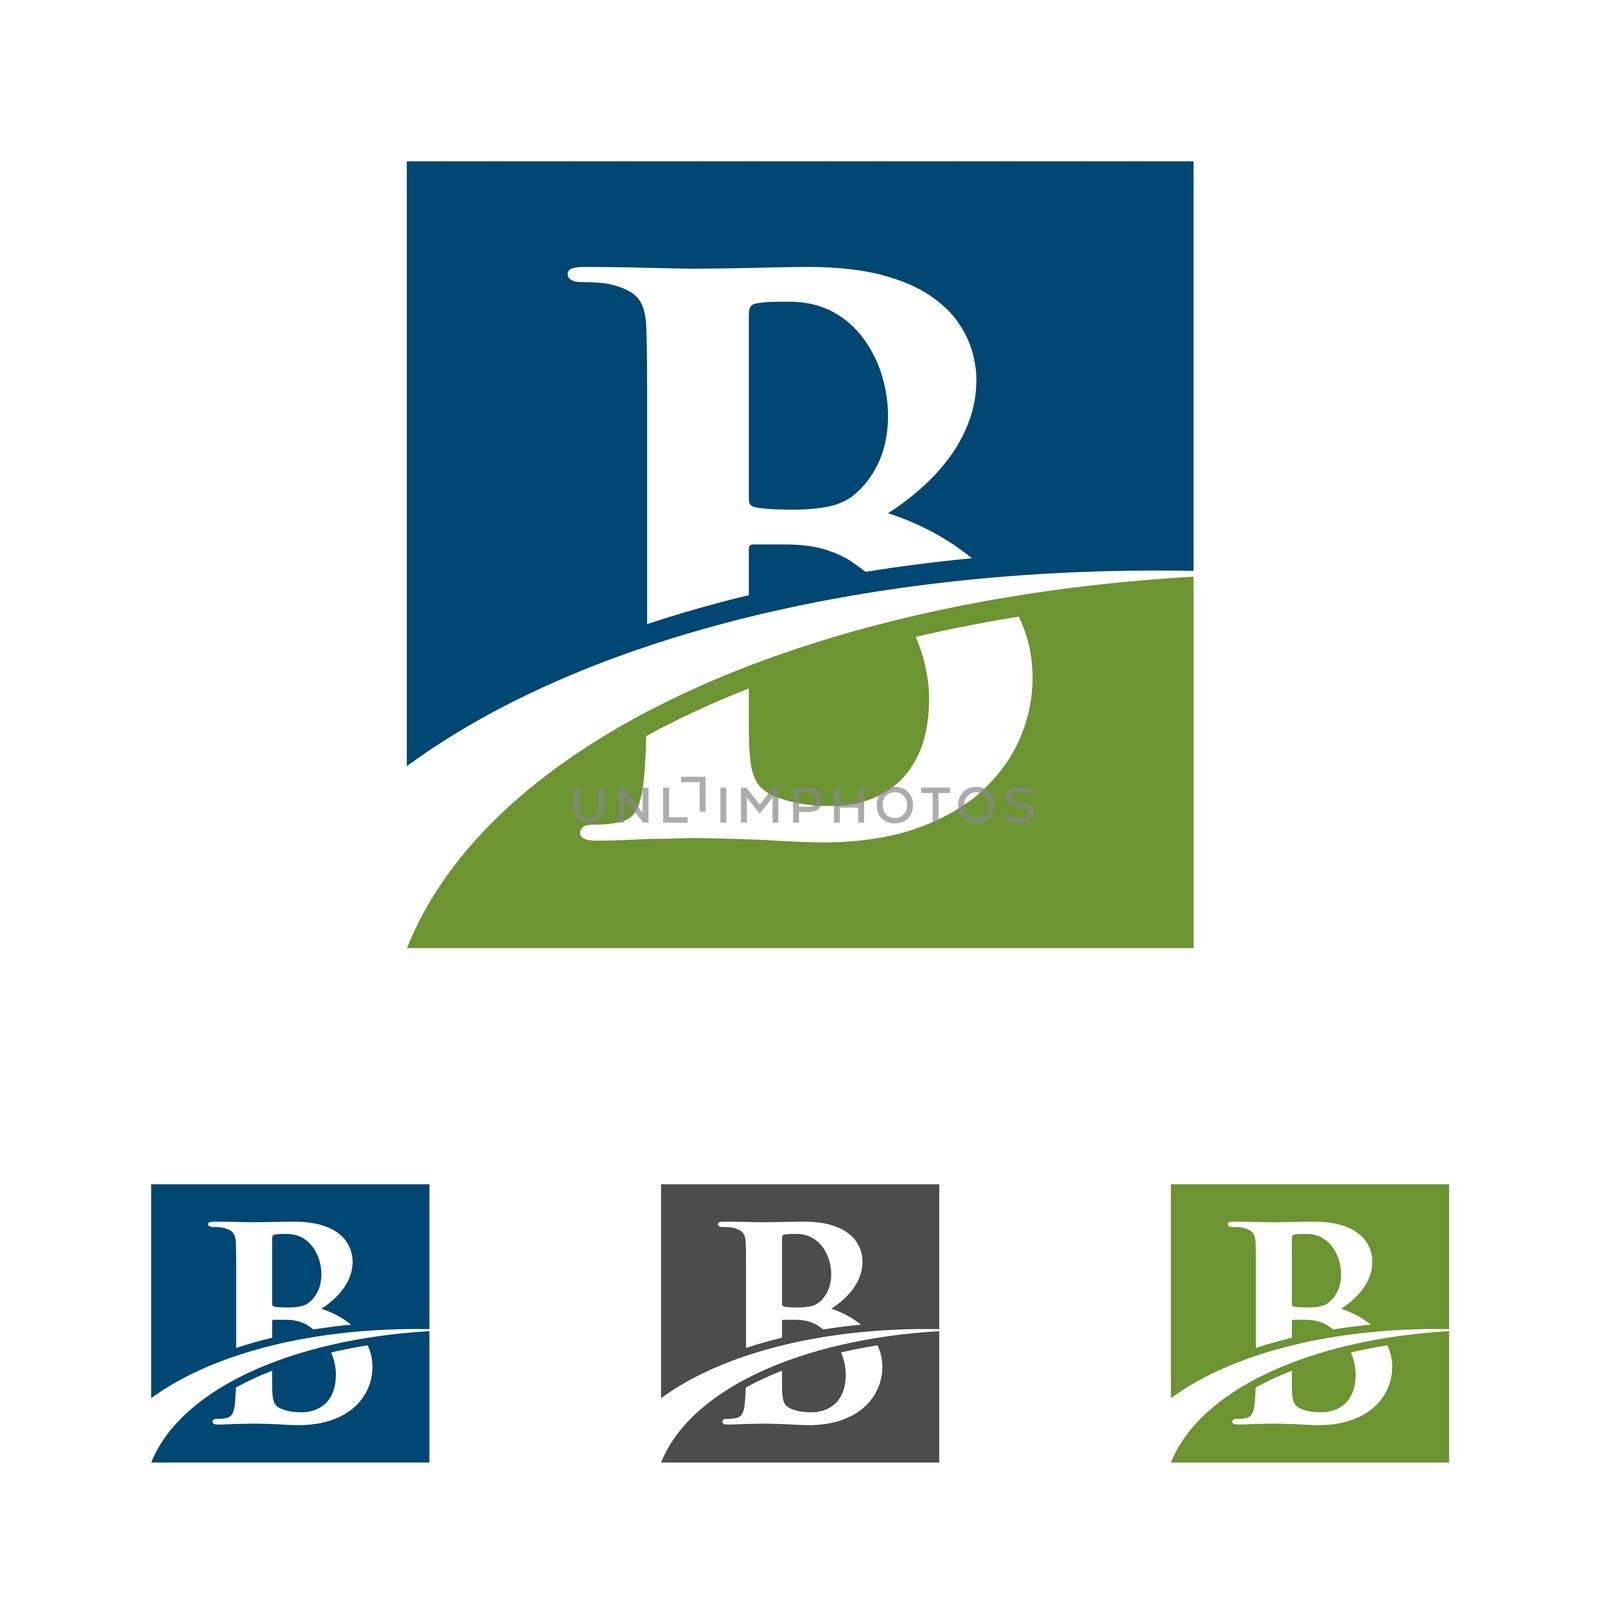 B Letter and Swoosh Logo Template Illustration Design. Vector EPS 10.